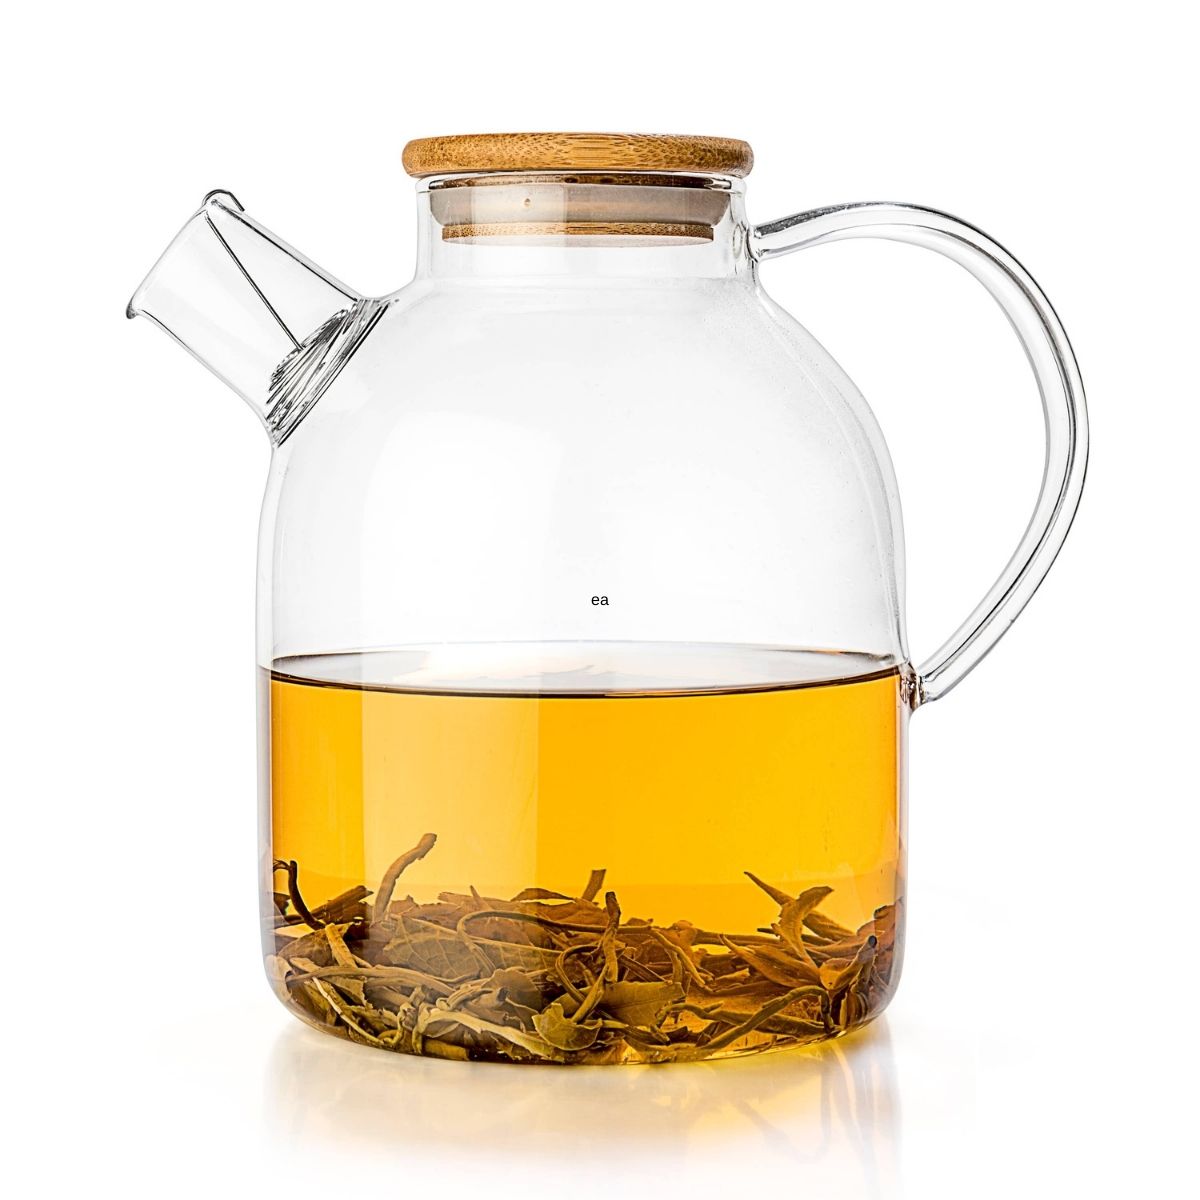 tea pot/kettle for loose tea, tealyra, olive and basket